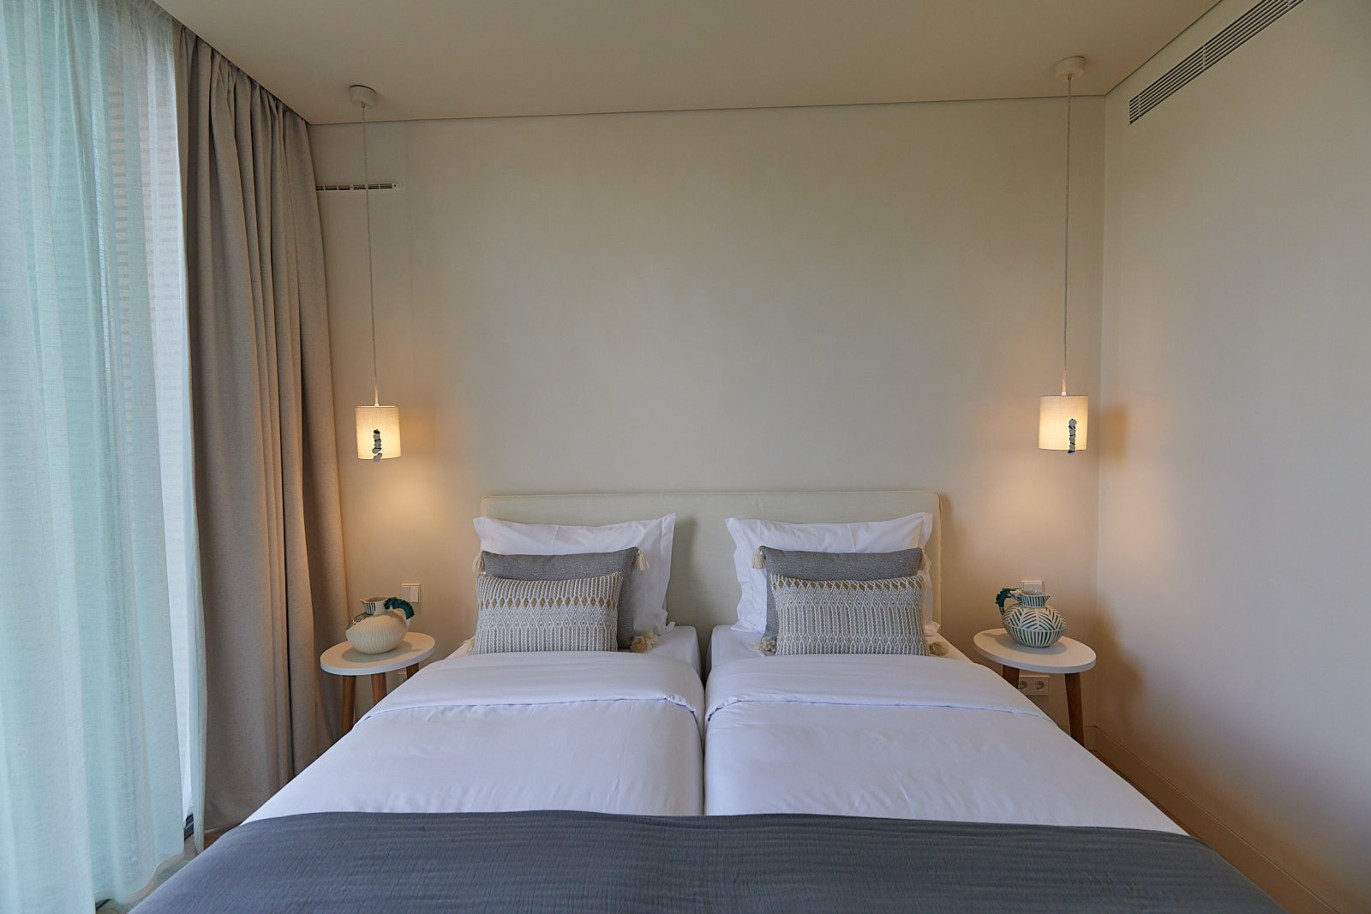 2 bedroom apartment in resort, for sale in Porches, Algarve_229190